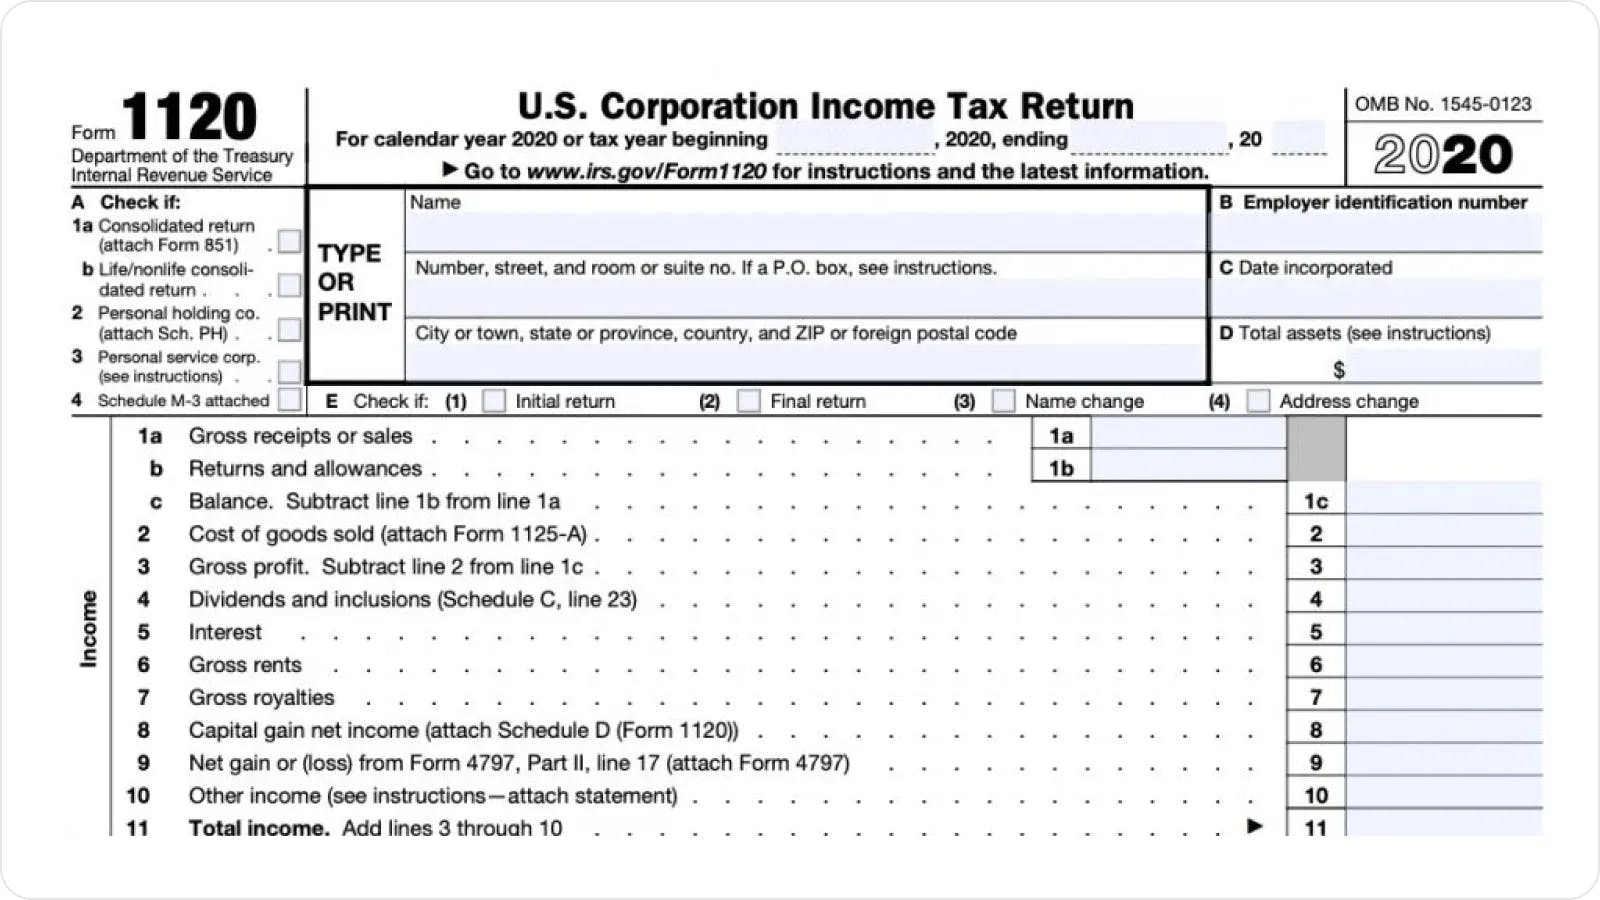 1120 Form - U.S. Corporation Income Tax Return